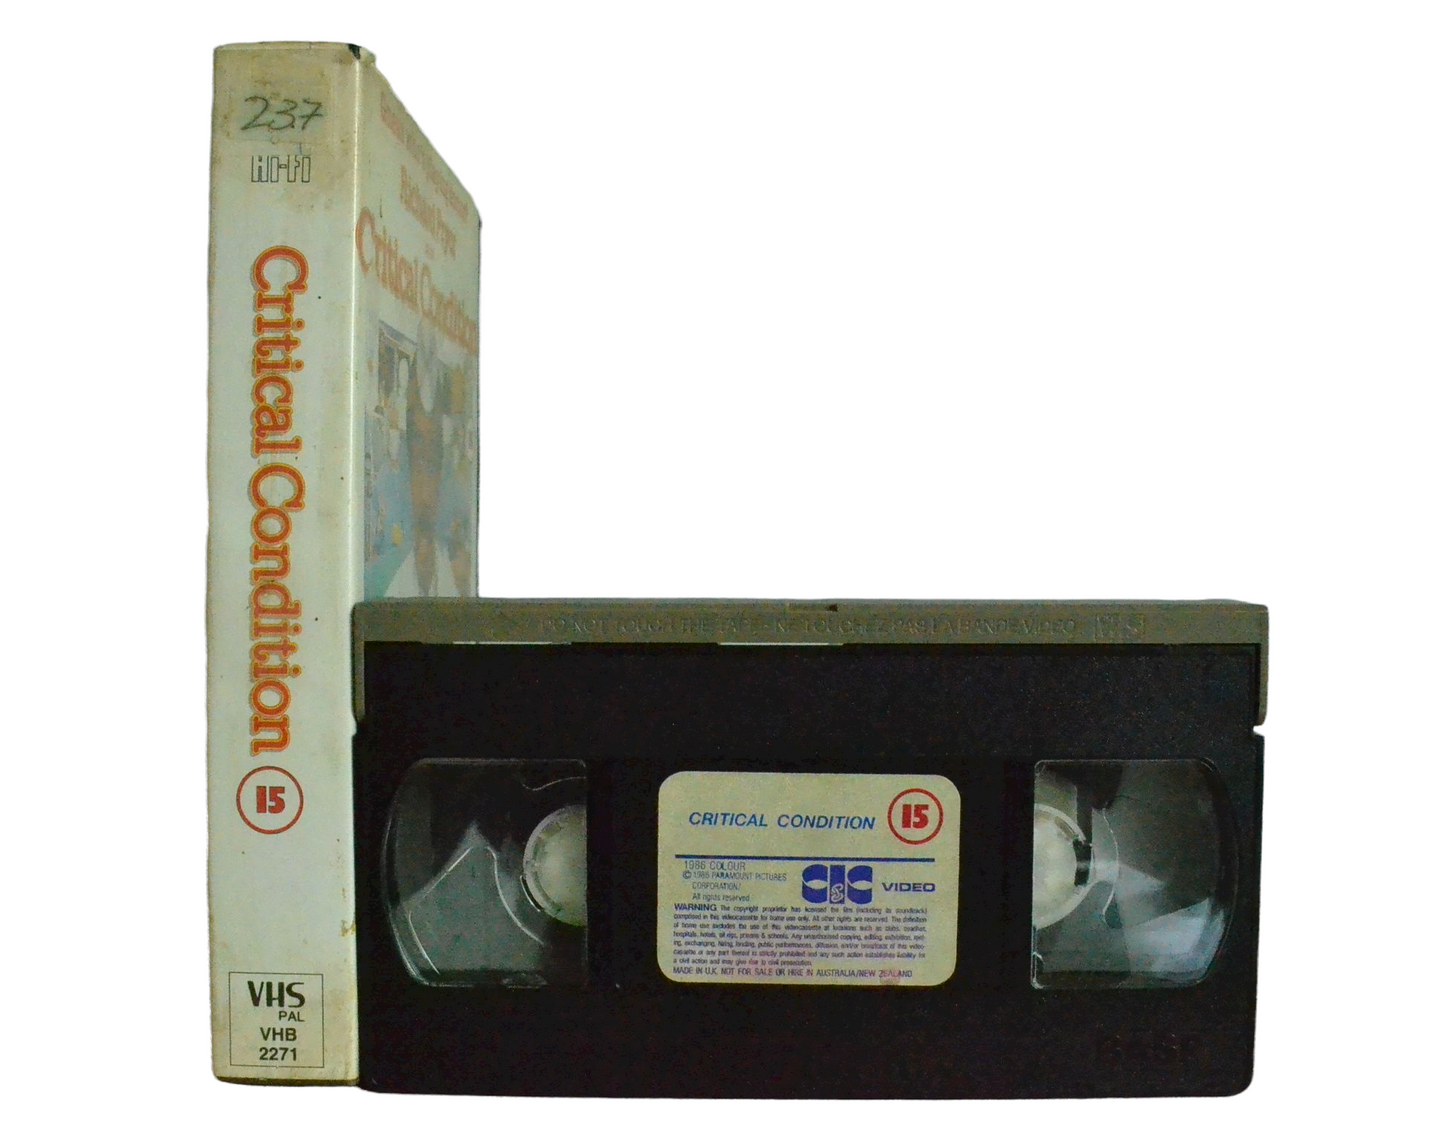 Critical Condition - Richard Pryor - CIC Videos - Vintage - Pal VHS-